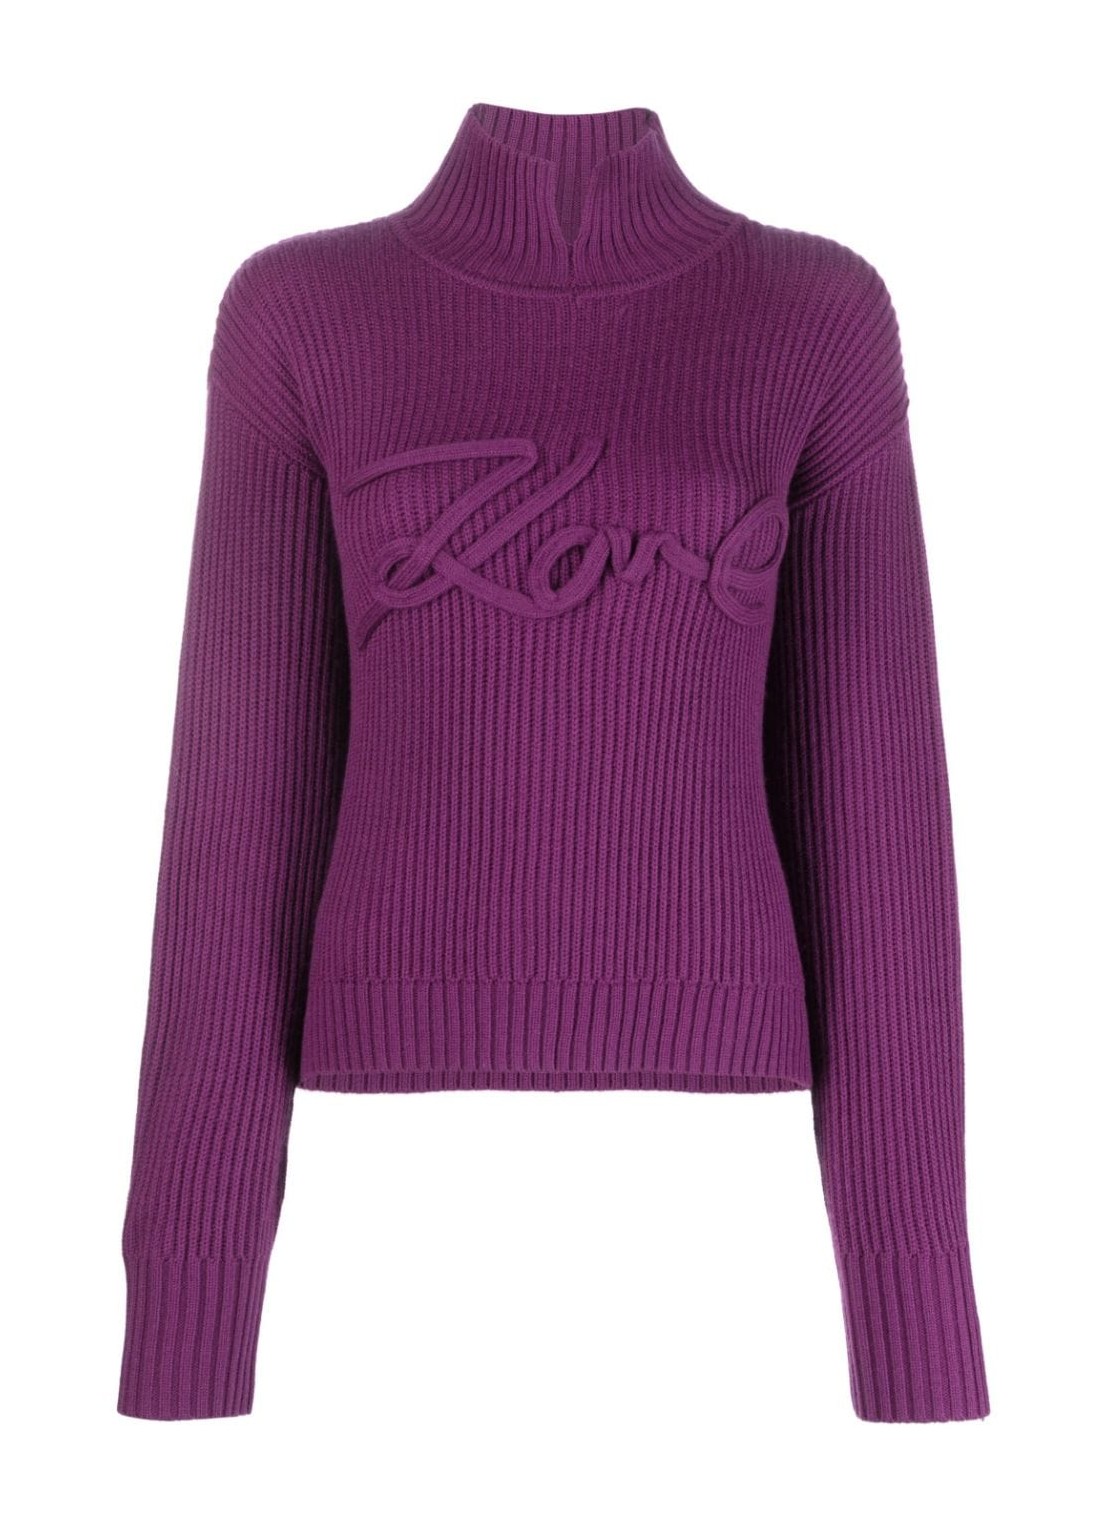 Punto karl lagerfeld knitwear woman signature soutache knit 236w2014 470 talla S
 